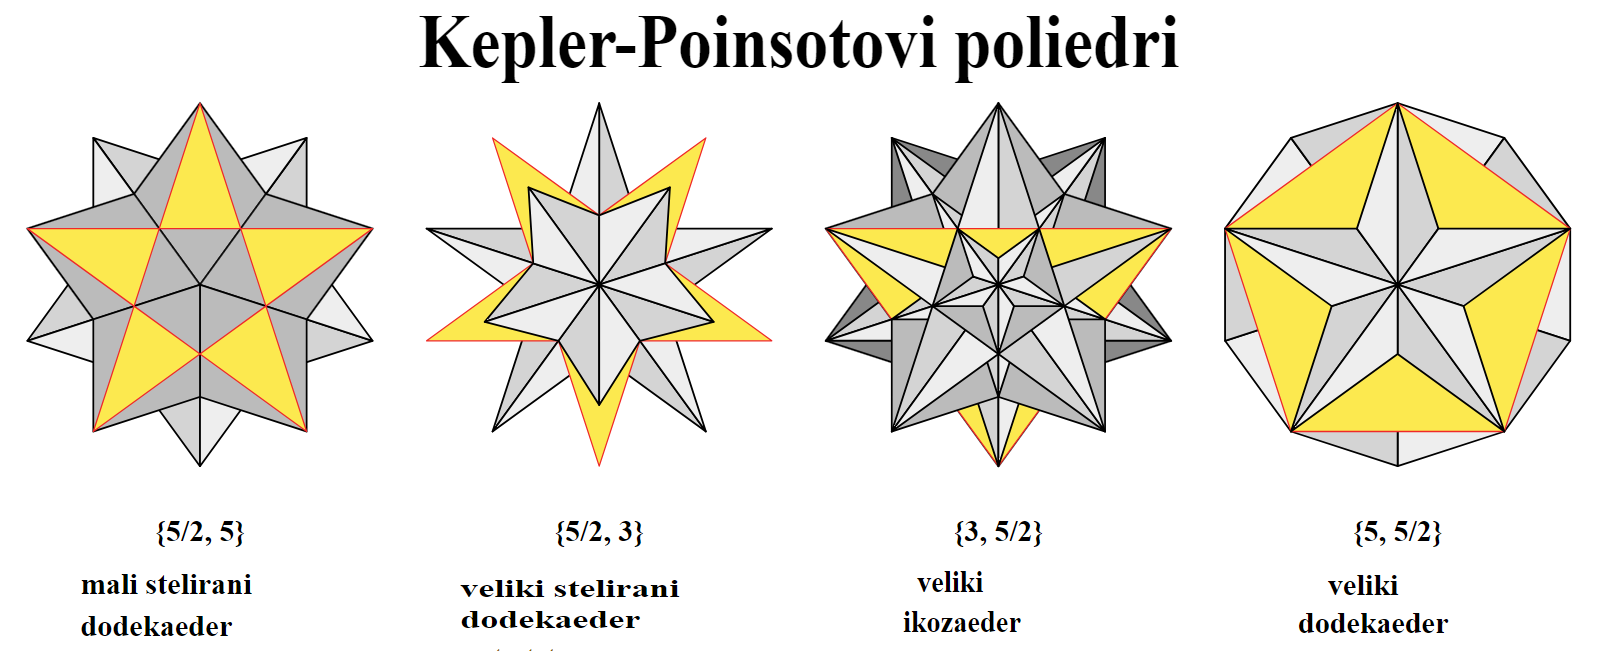 Četiri Kepler-Poinsotova poliedra